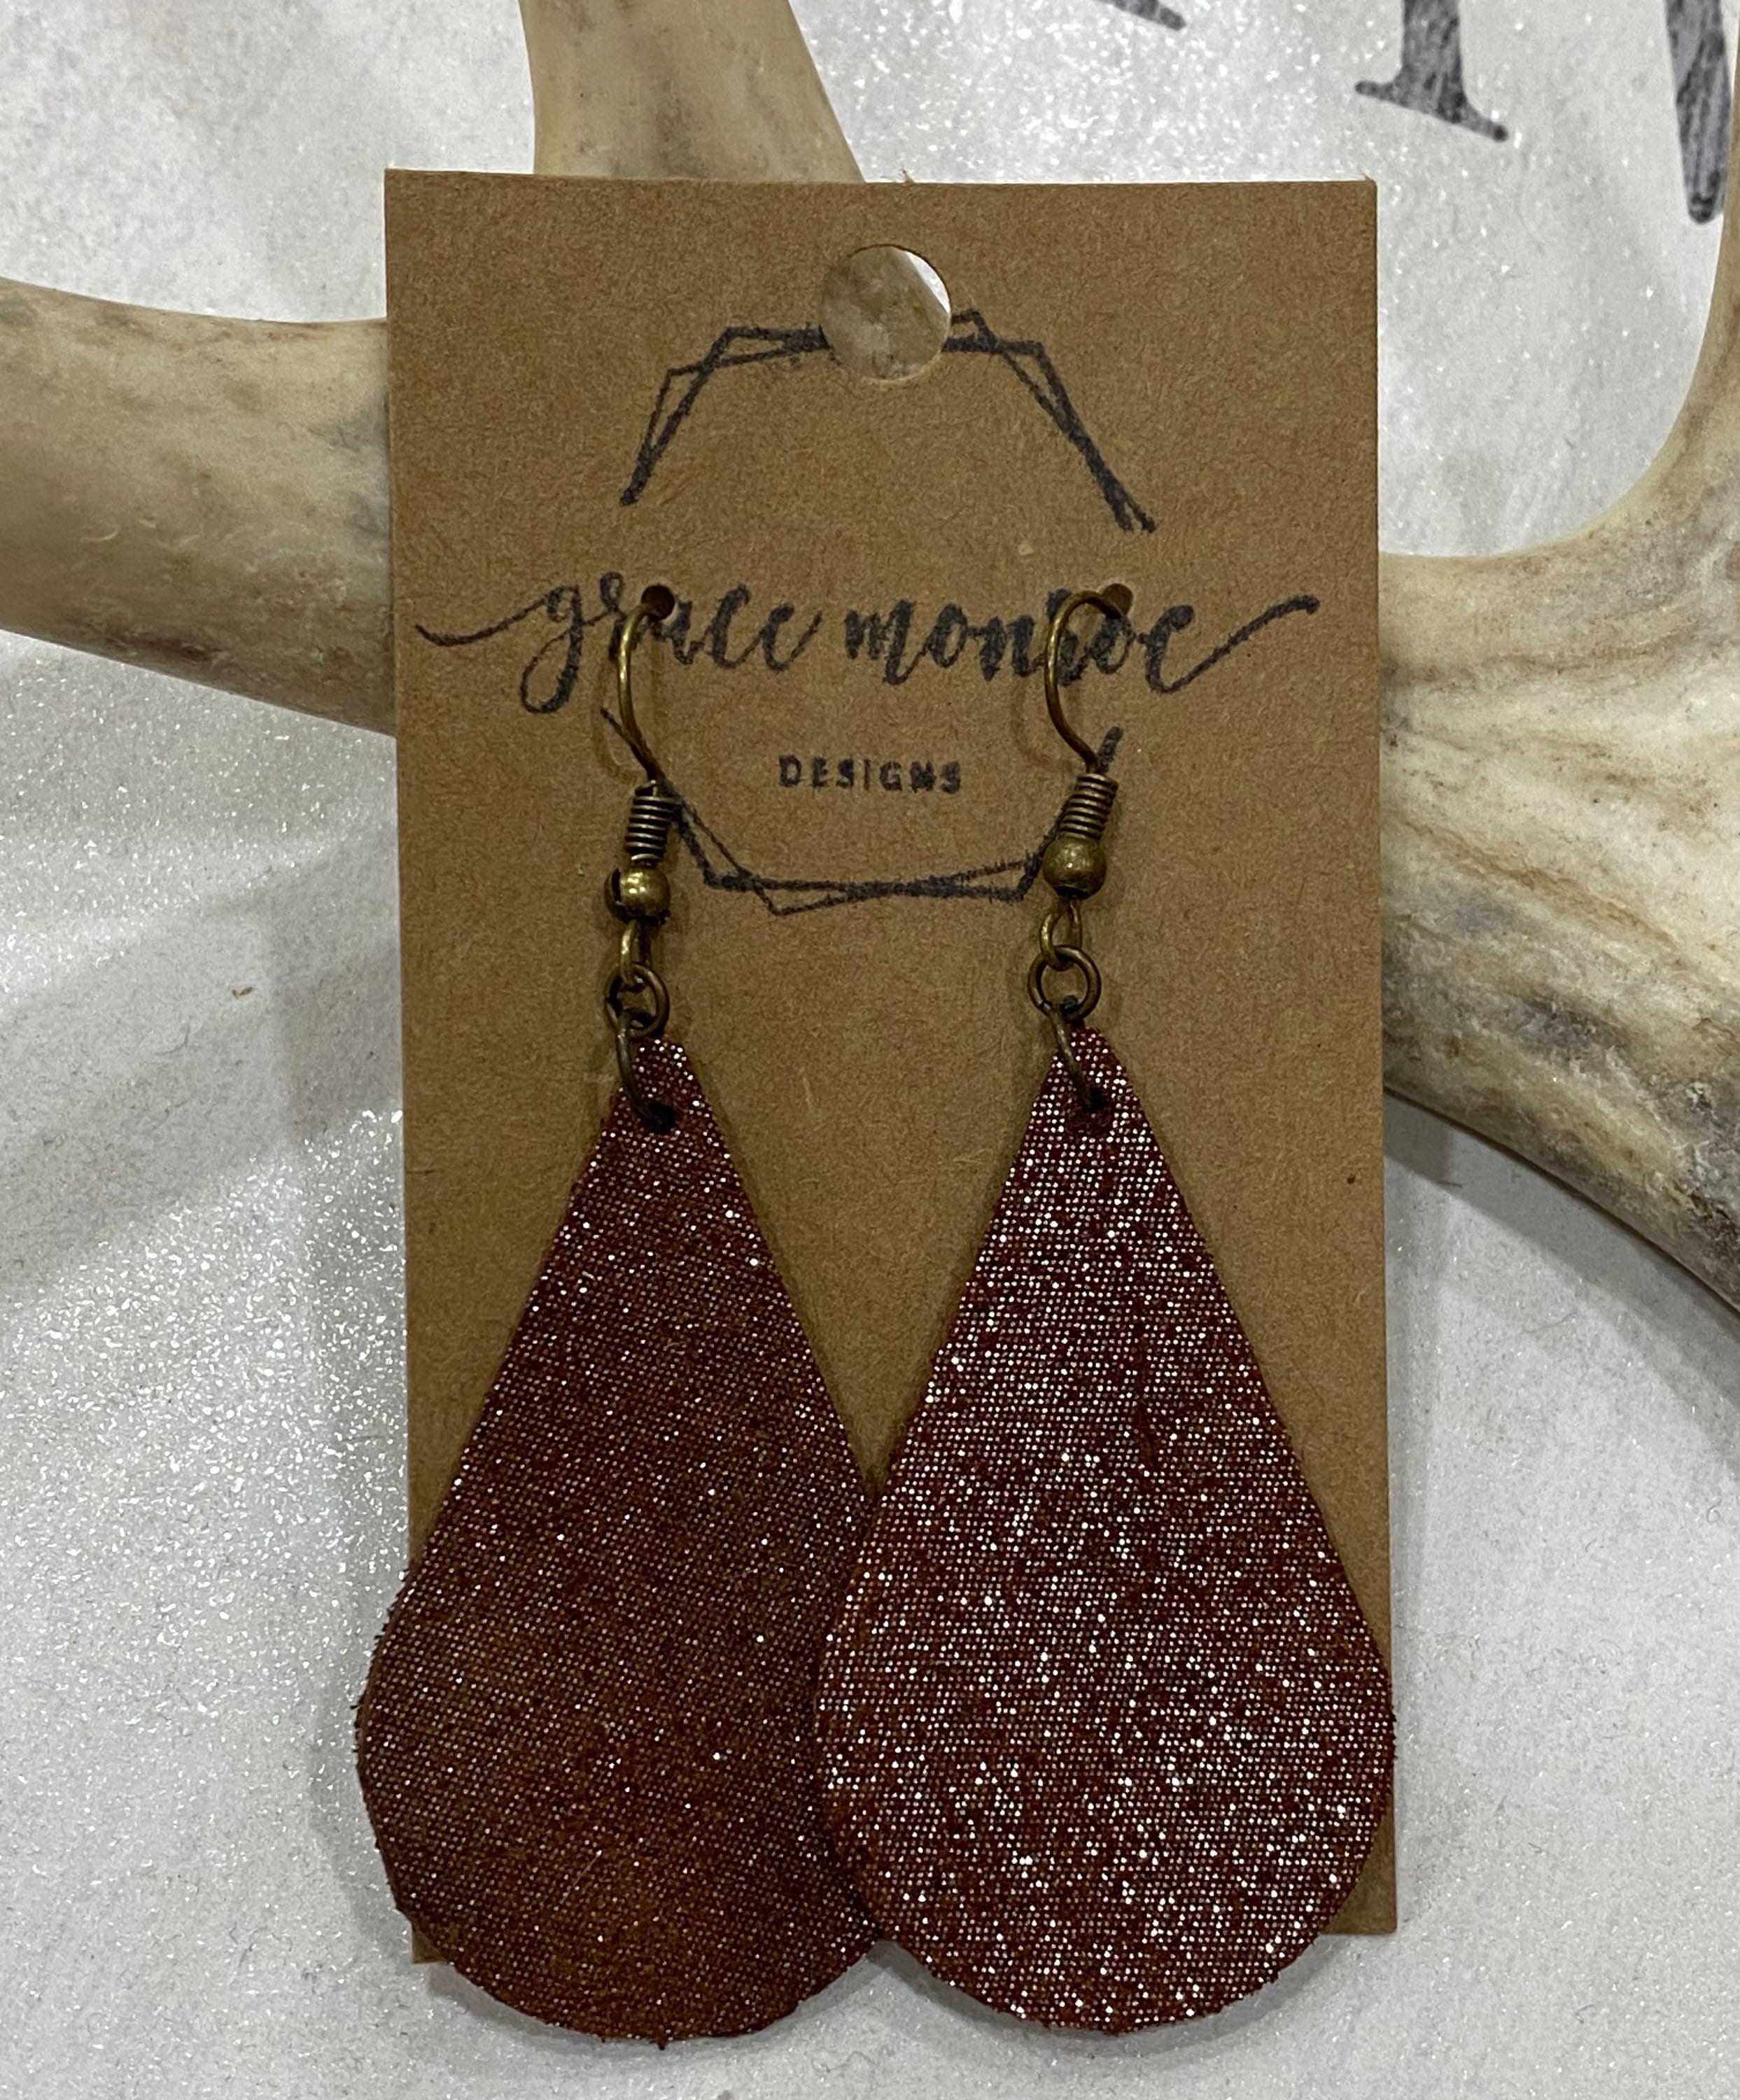 Burgundy Leather Teardrop Earrings with Floral Cutout Design | LeerHom.Com